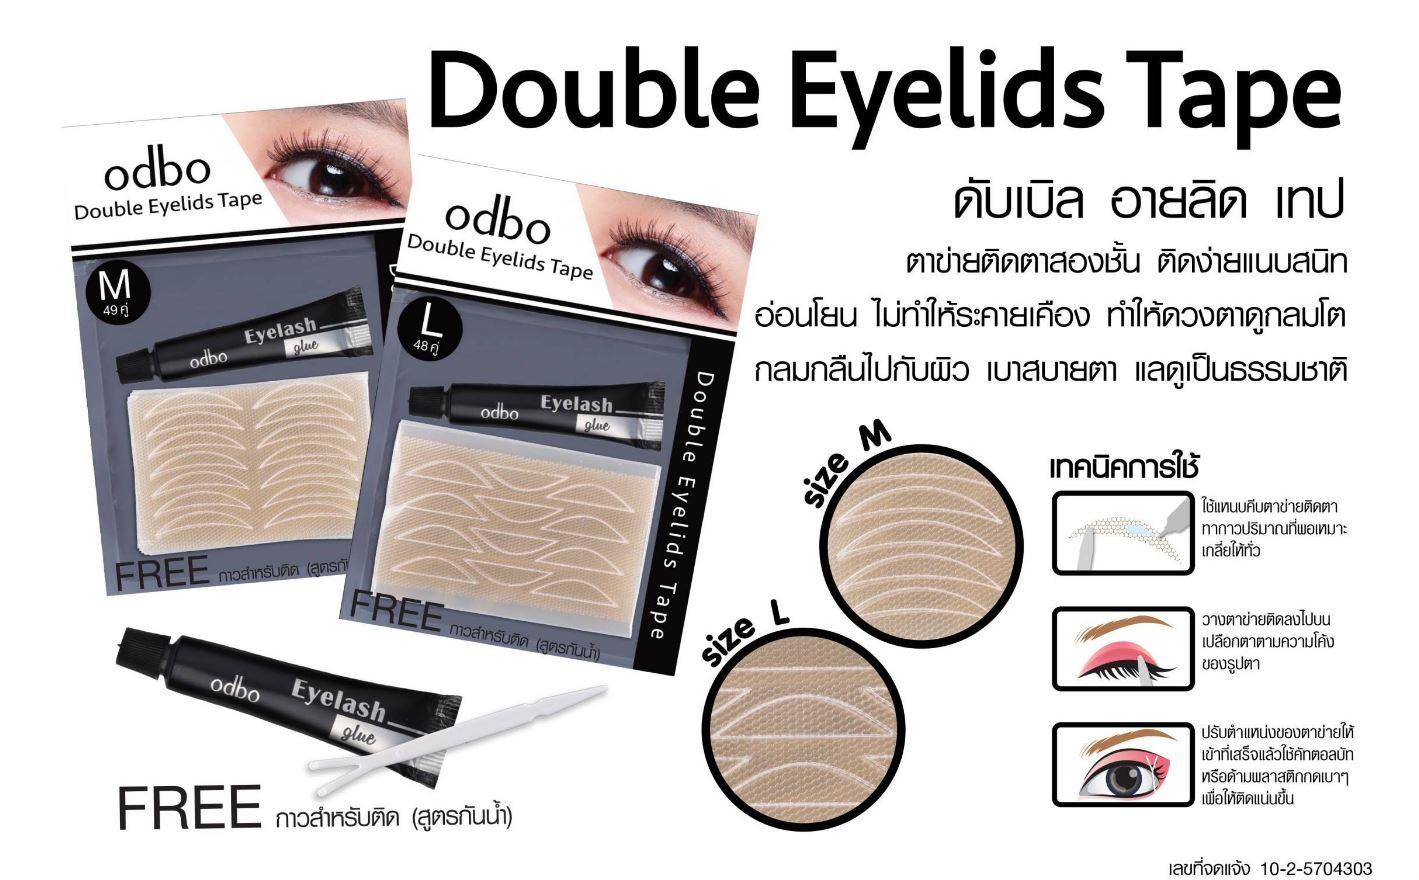 Odbo Double Eyelids Tape ตาข่ายติดตาสองชั้น+กาว มีให้เลือก 2 ไซส์ (1กล่อง)